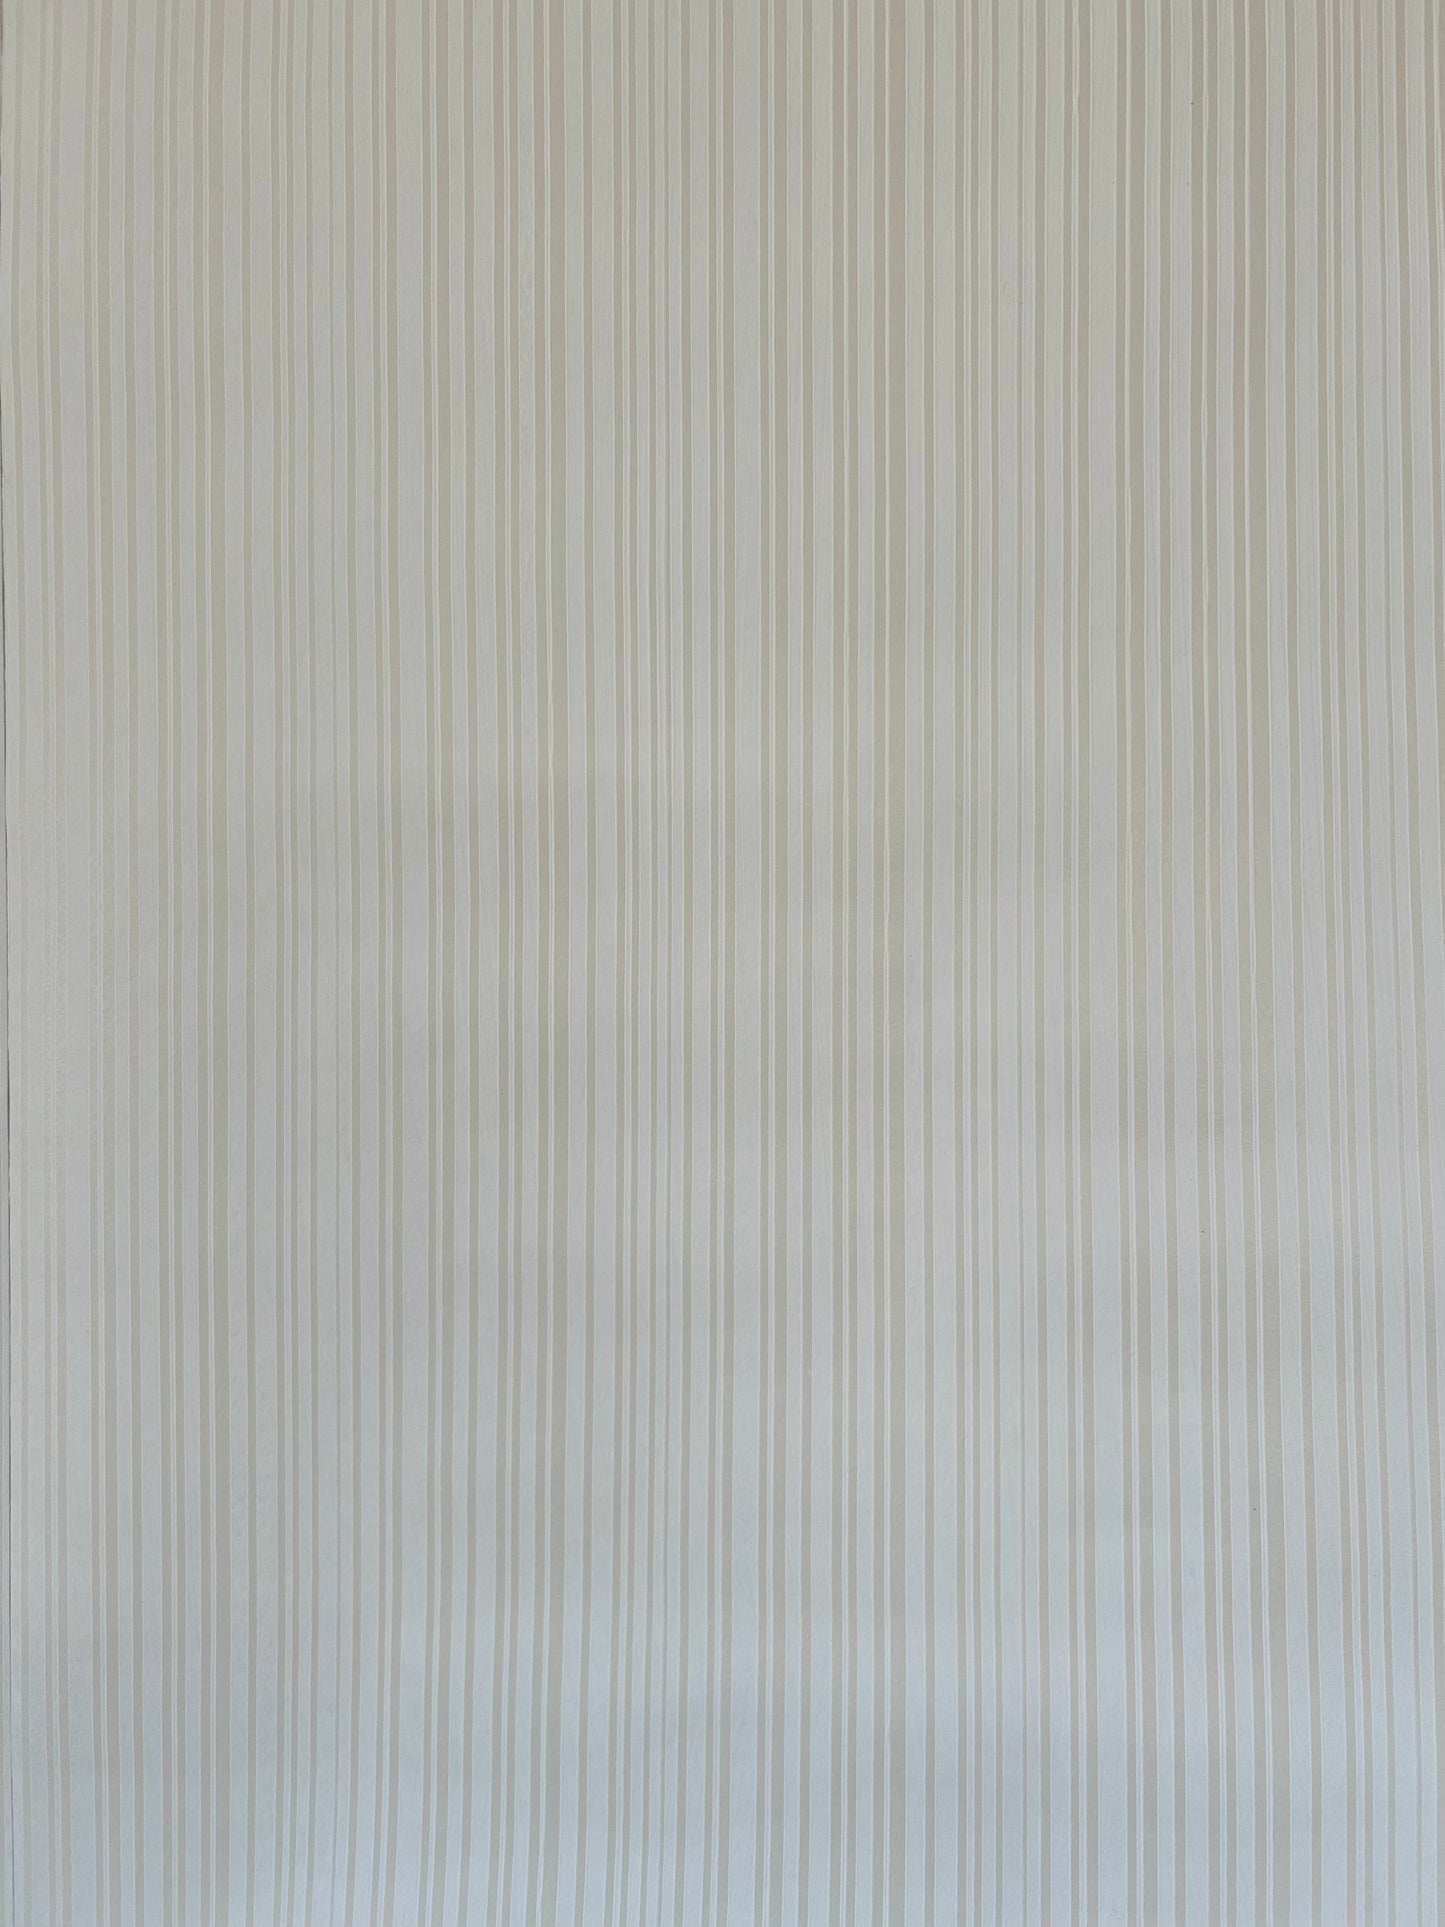 Hand-Painted Strié Wallpaper rolls